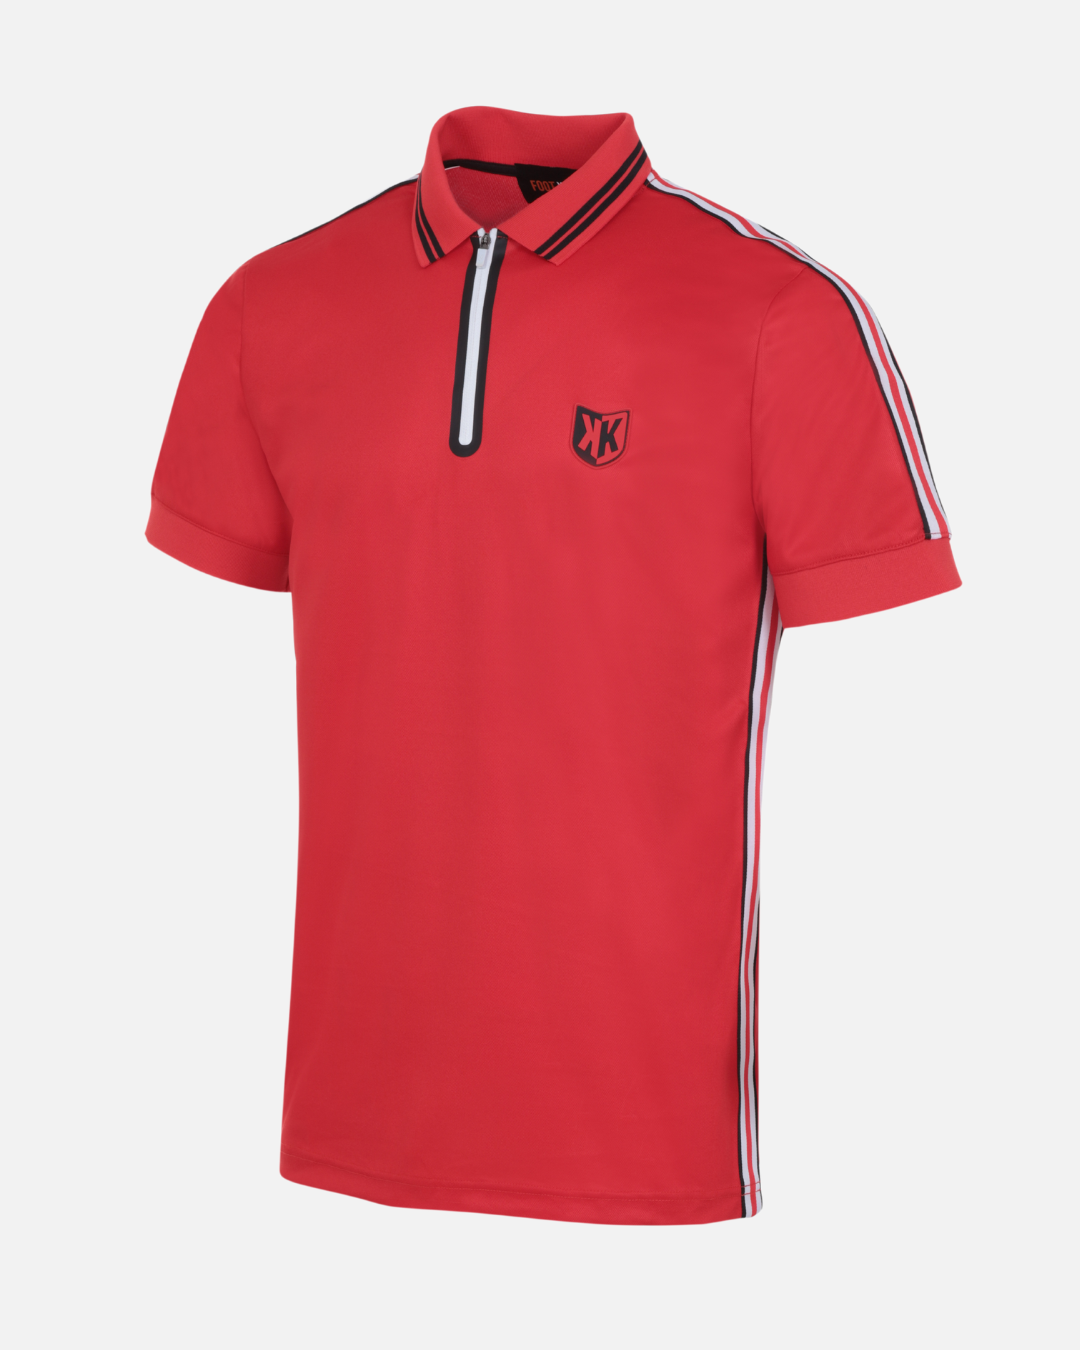 FK Teams Polo Shirt - Red/White/Black 